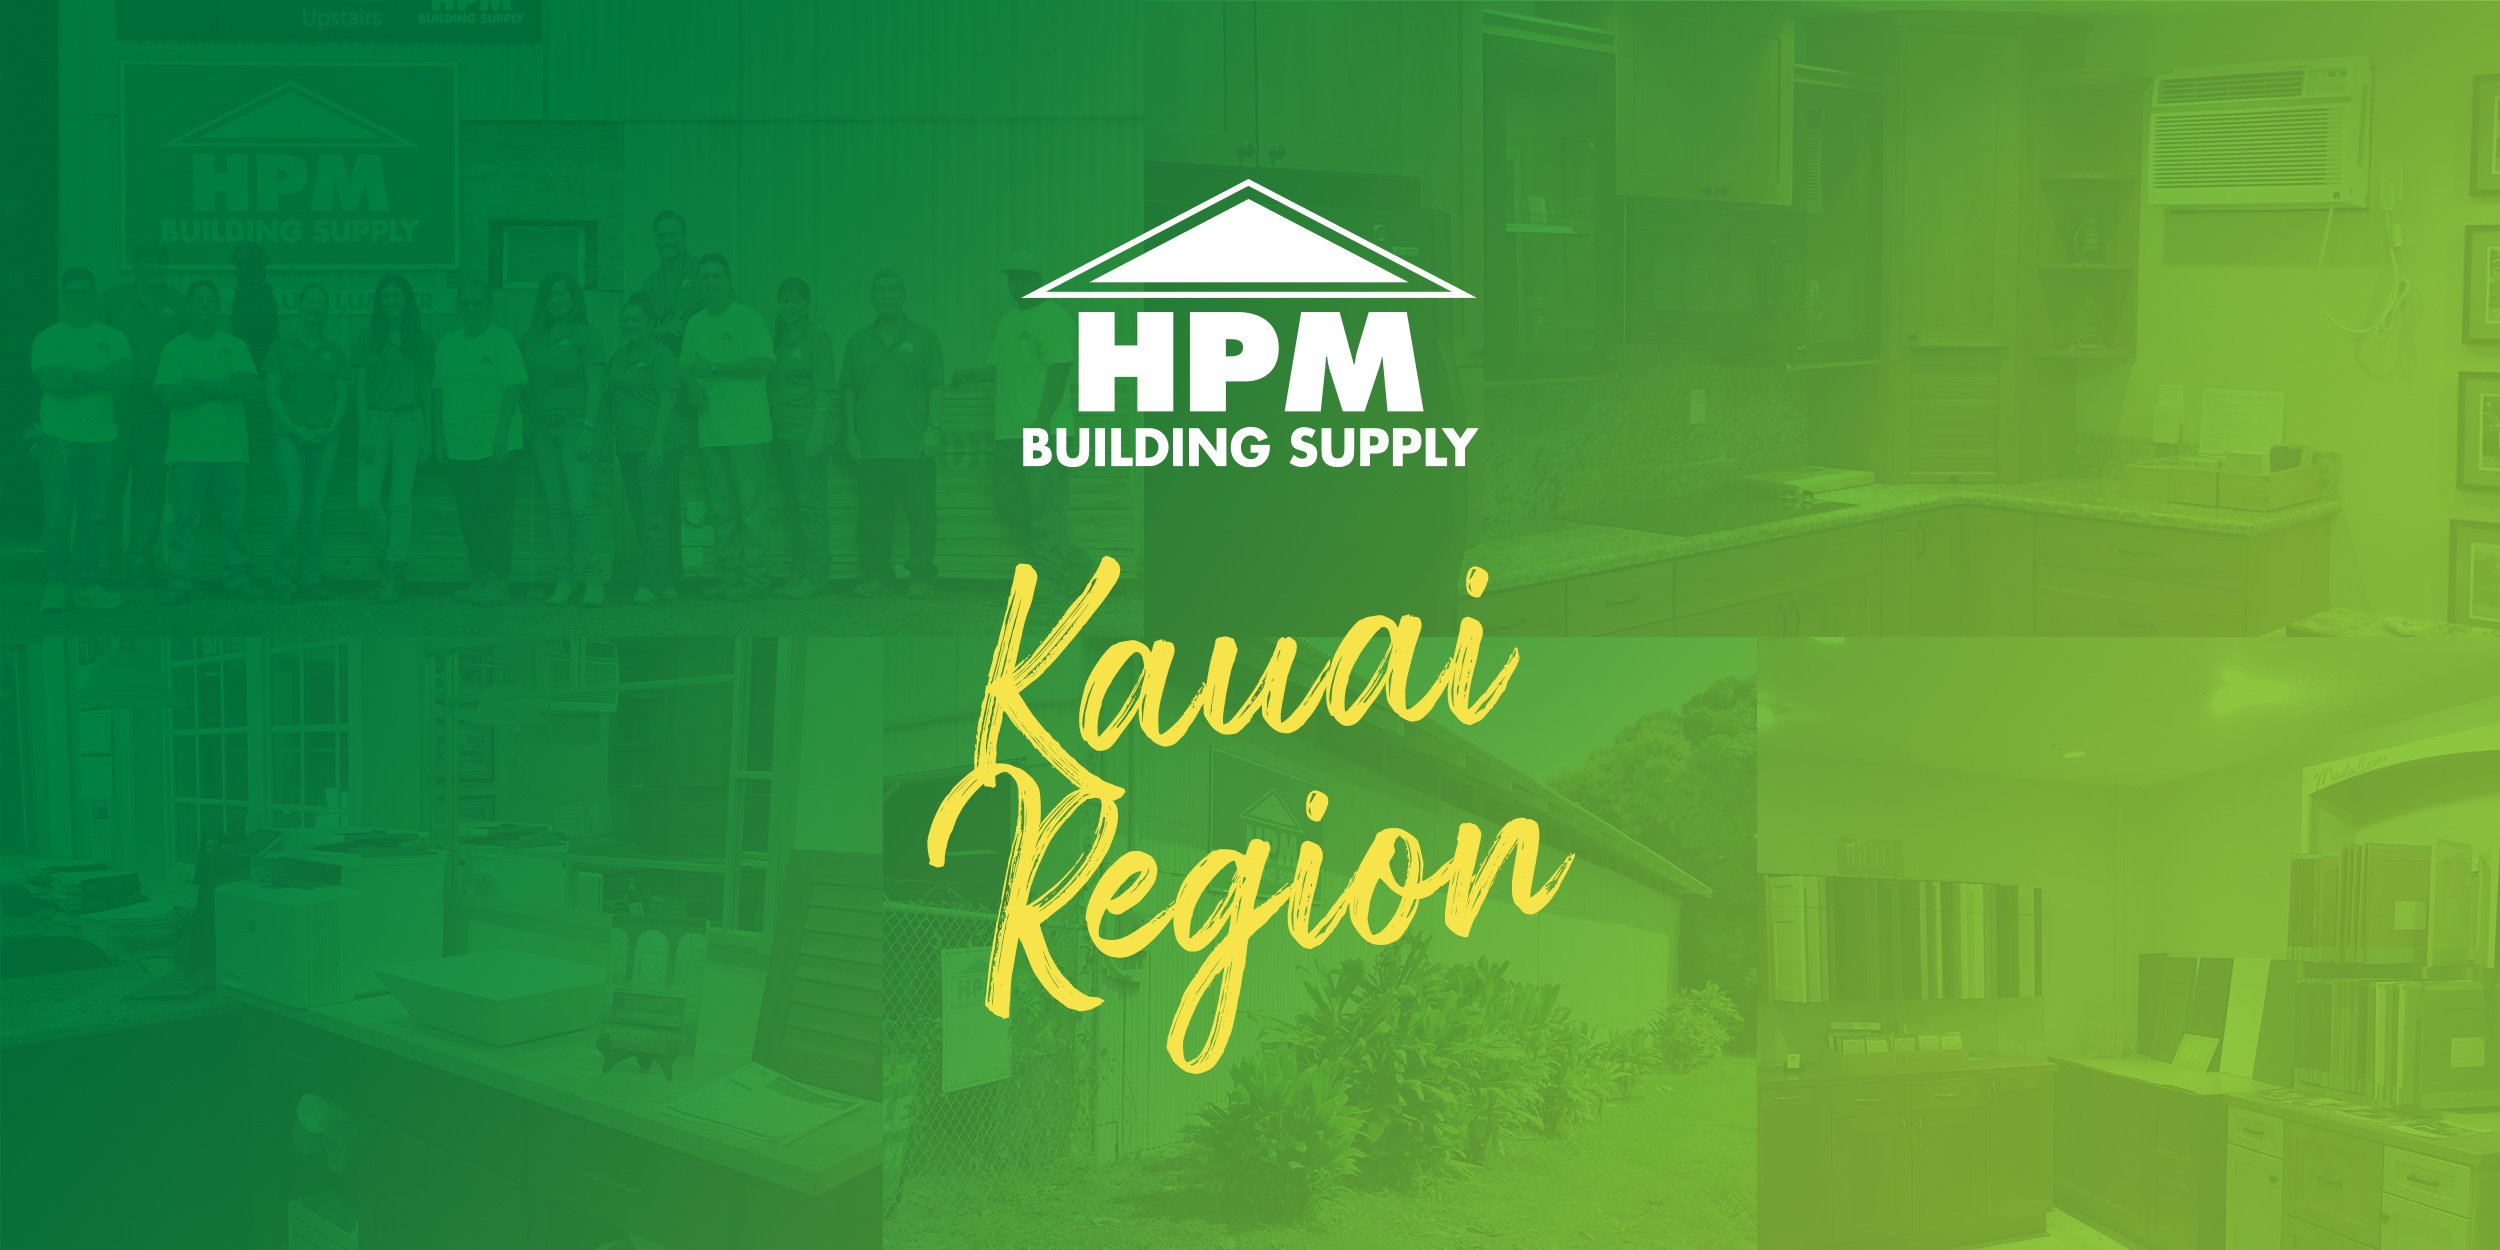 HPM Building Supply: Kauai Region